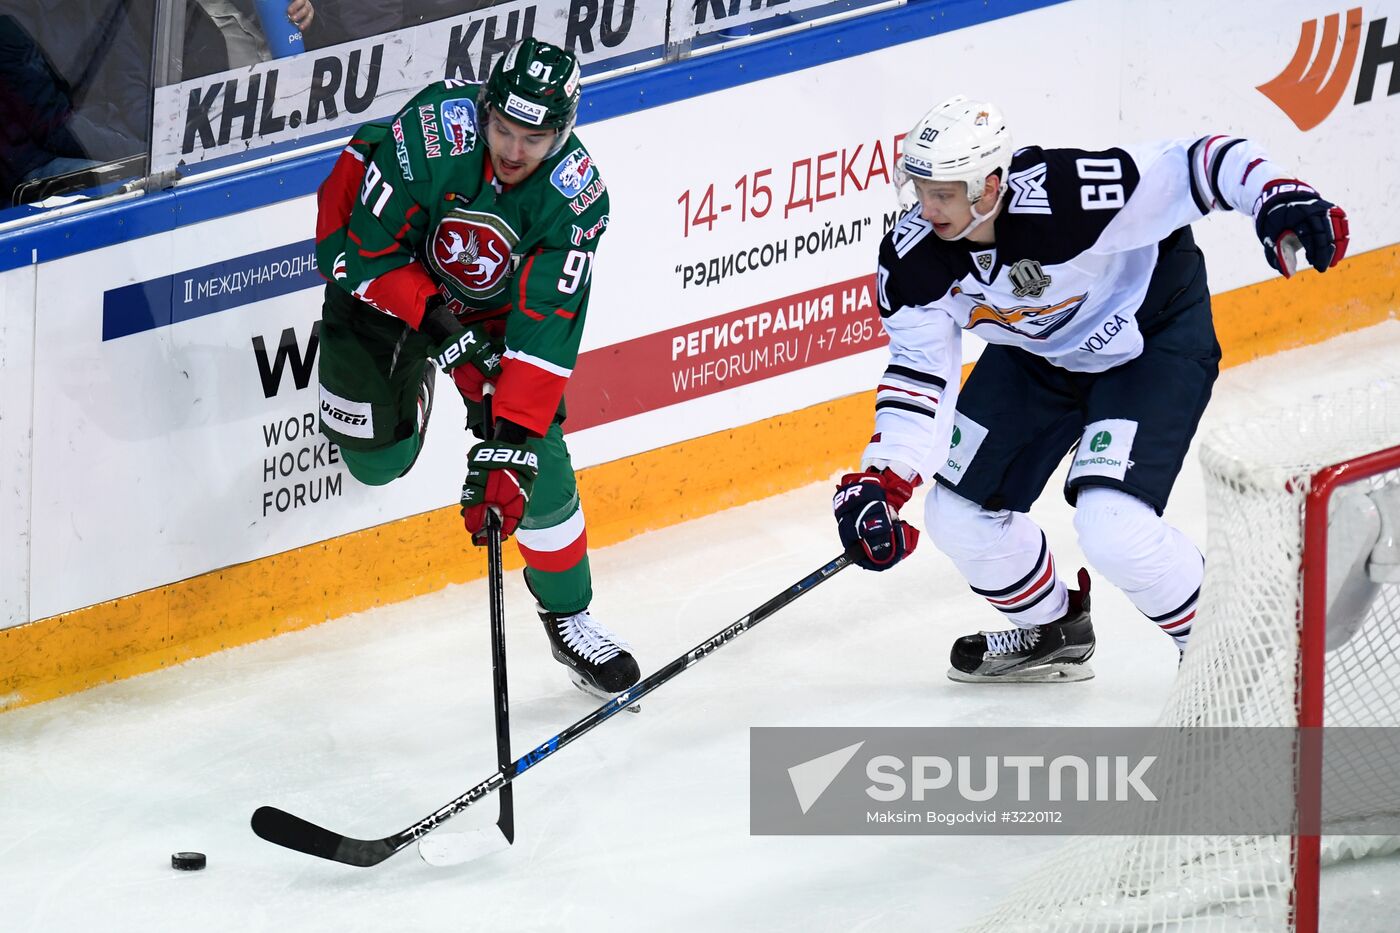 Kontinental Hockey League. Ak Bars vs. Metallurg Magnitogorsk